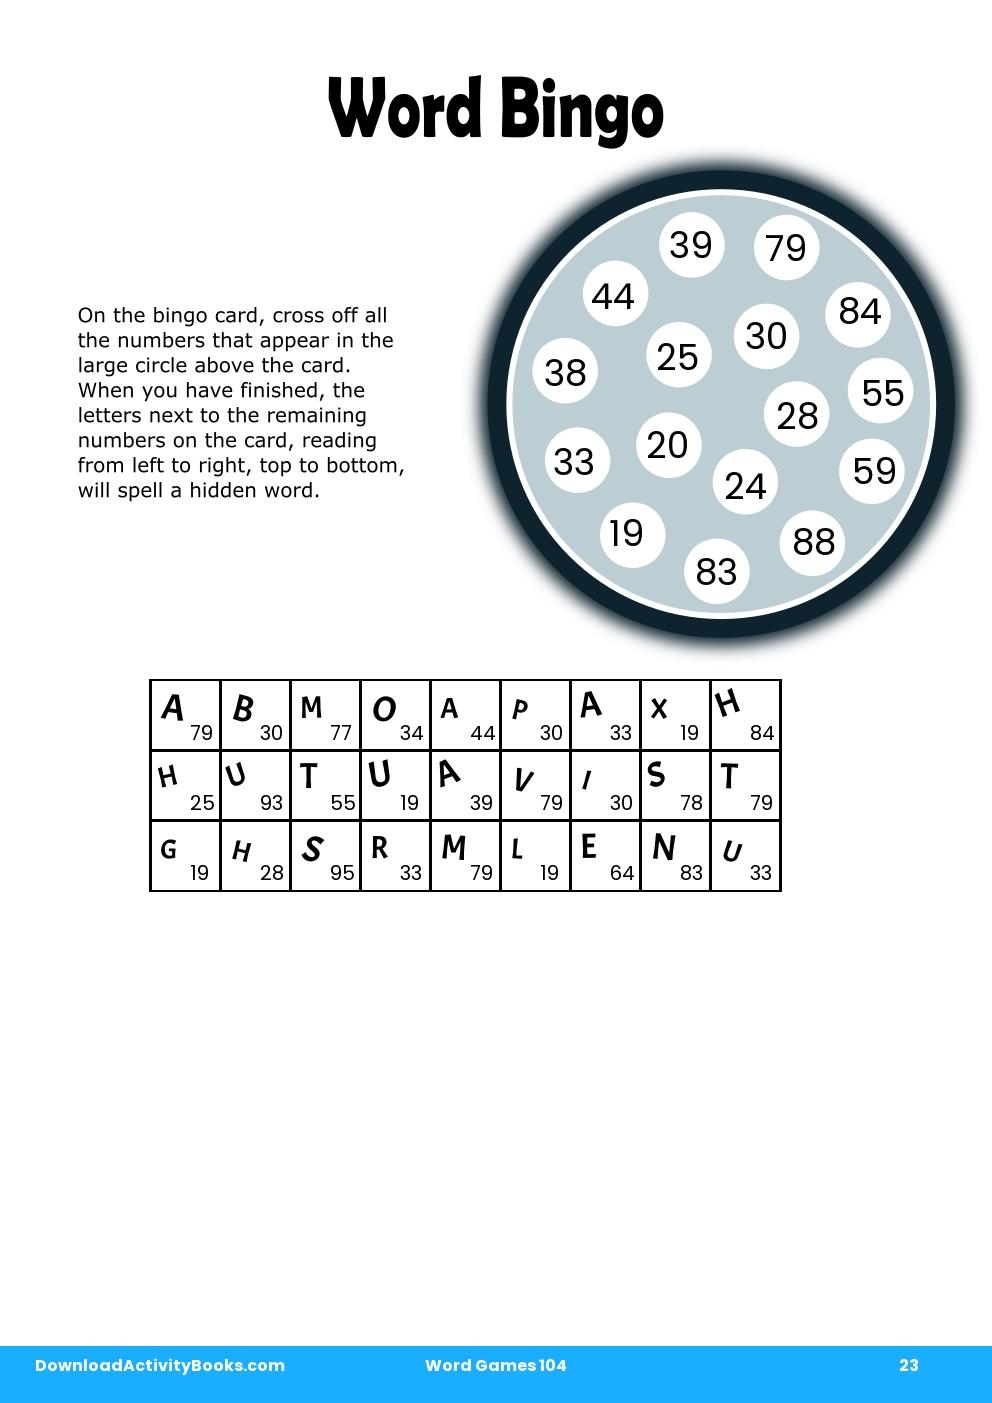 Word Bingo in Word Games 104